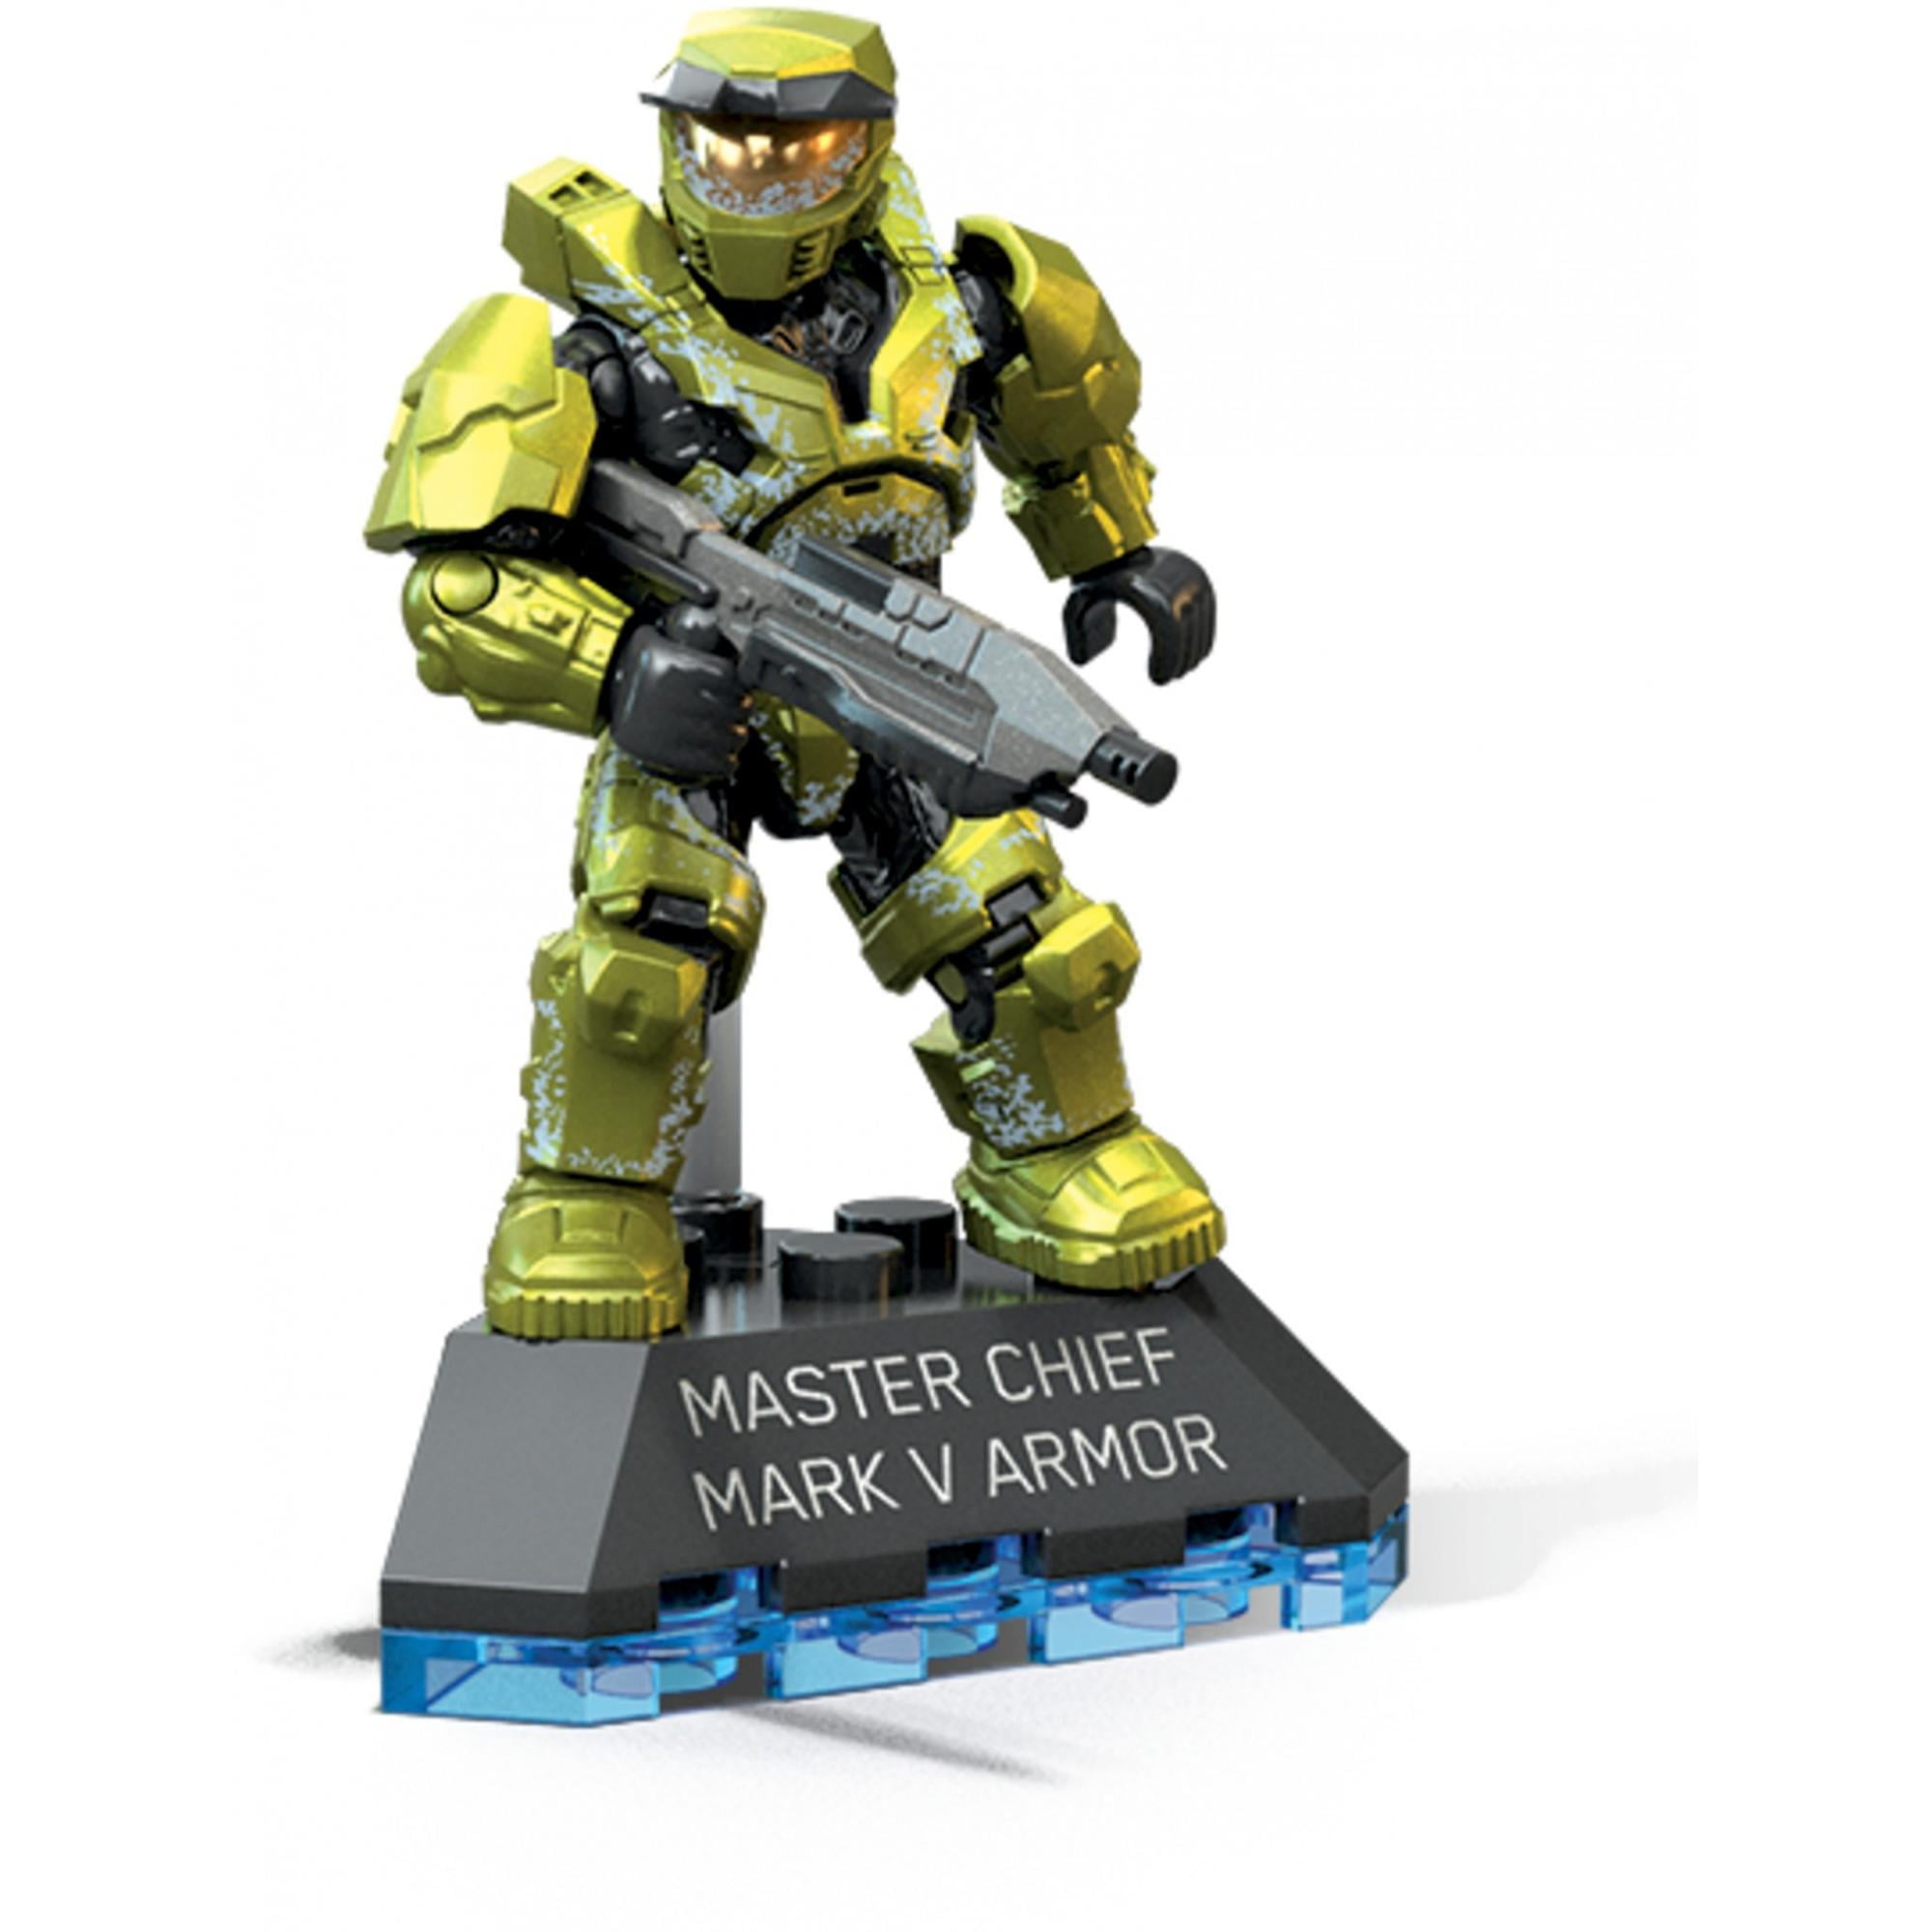 WX Mega Bloks Halo Heroes Sergeant Forge NEW 24 Pcs Action Figure